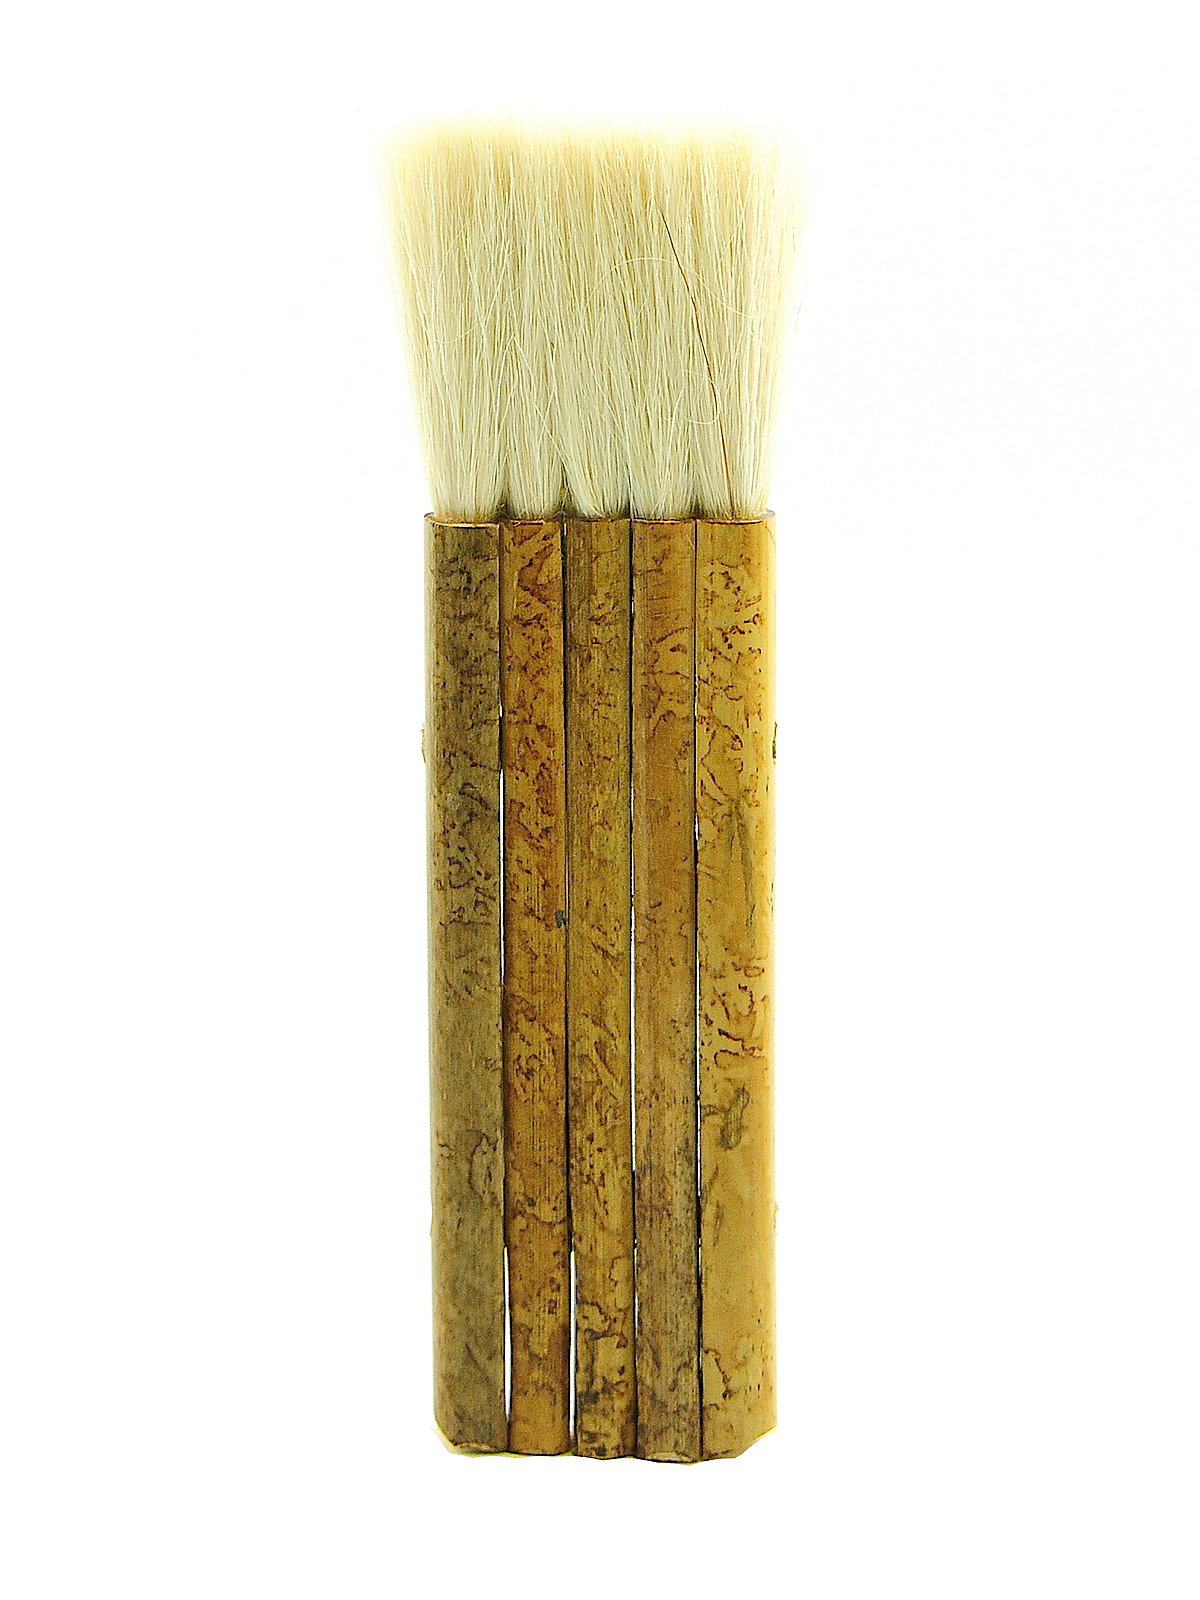 Yasutomo Student Hake Brushes